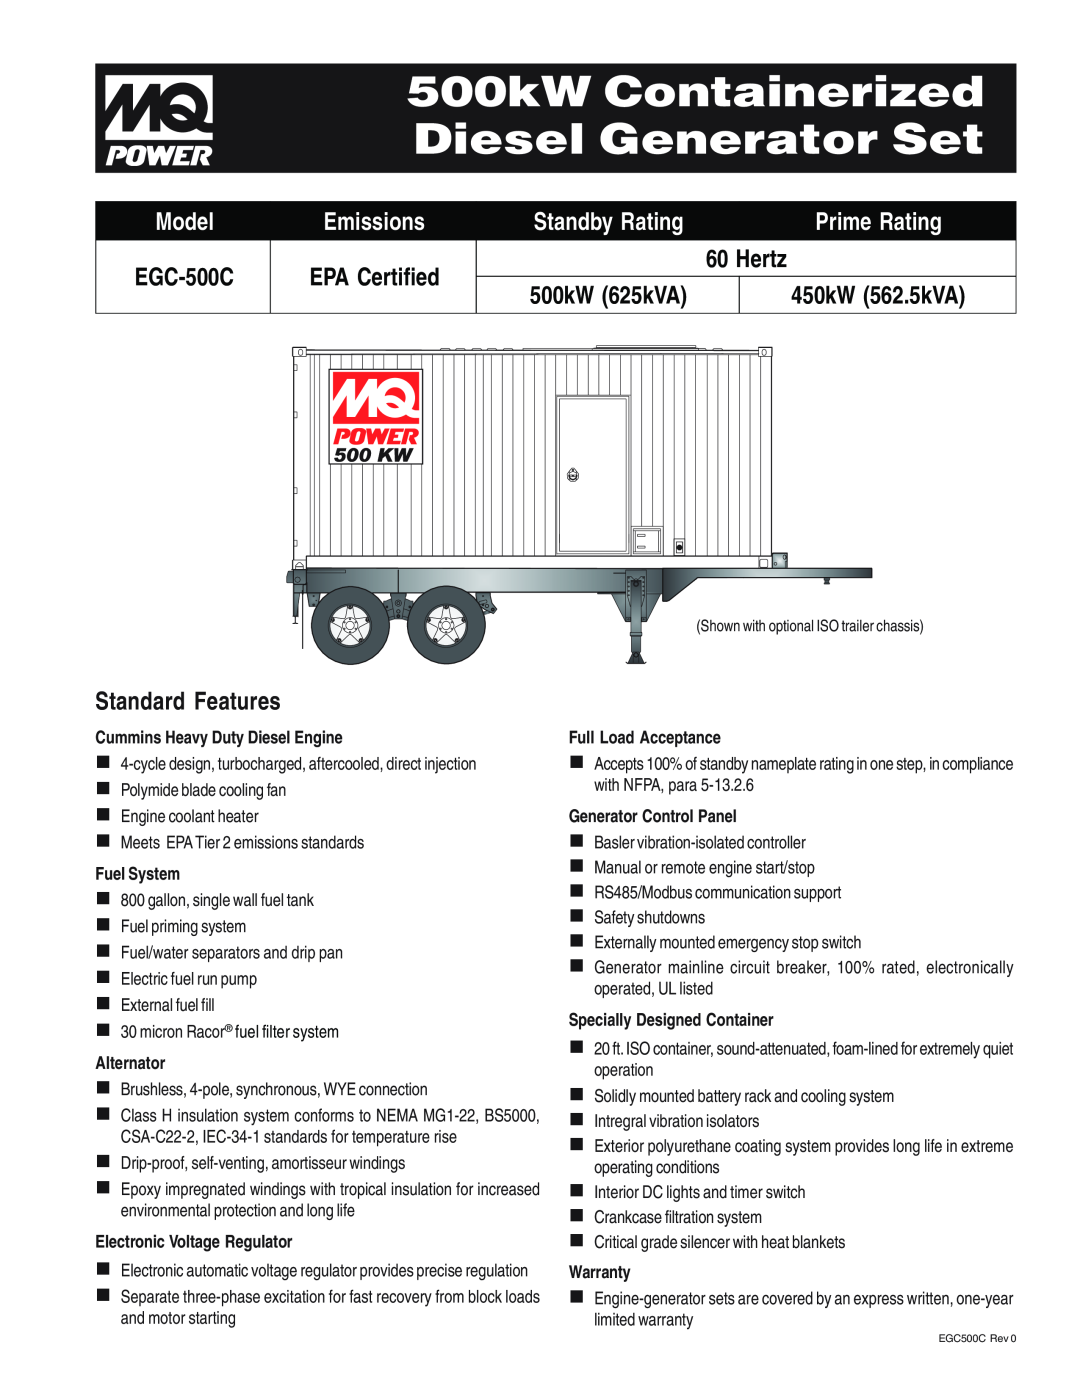 Multiquip EGC-500C warranty 500kW Containerized Diesel Generator Set, Hertz, Standard Features, Model, Emissions, Warranty 